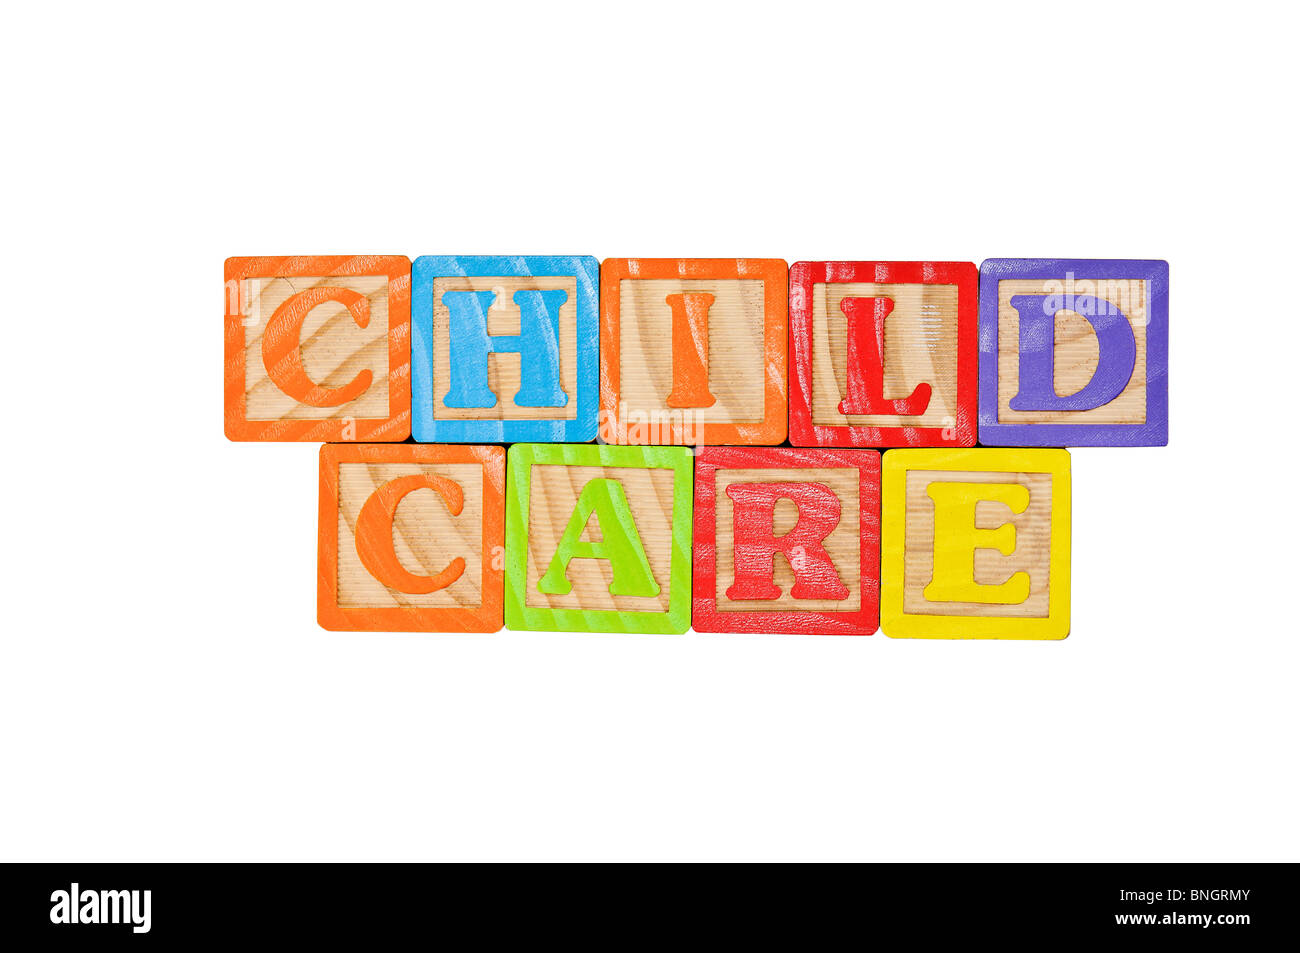 Childrens Alphabet Blocks spelling the words Child Care Stock Photo